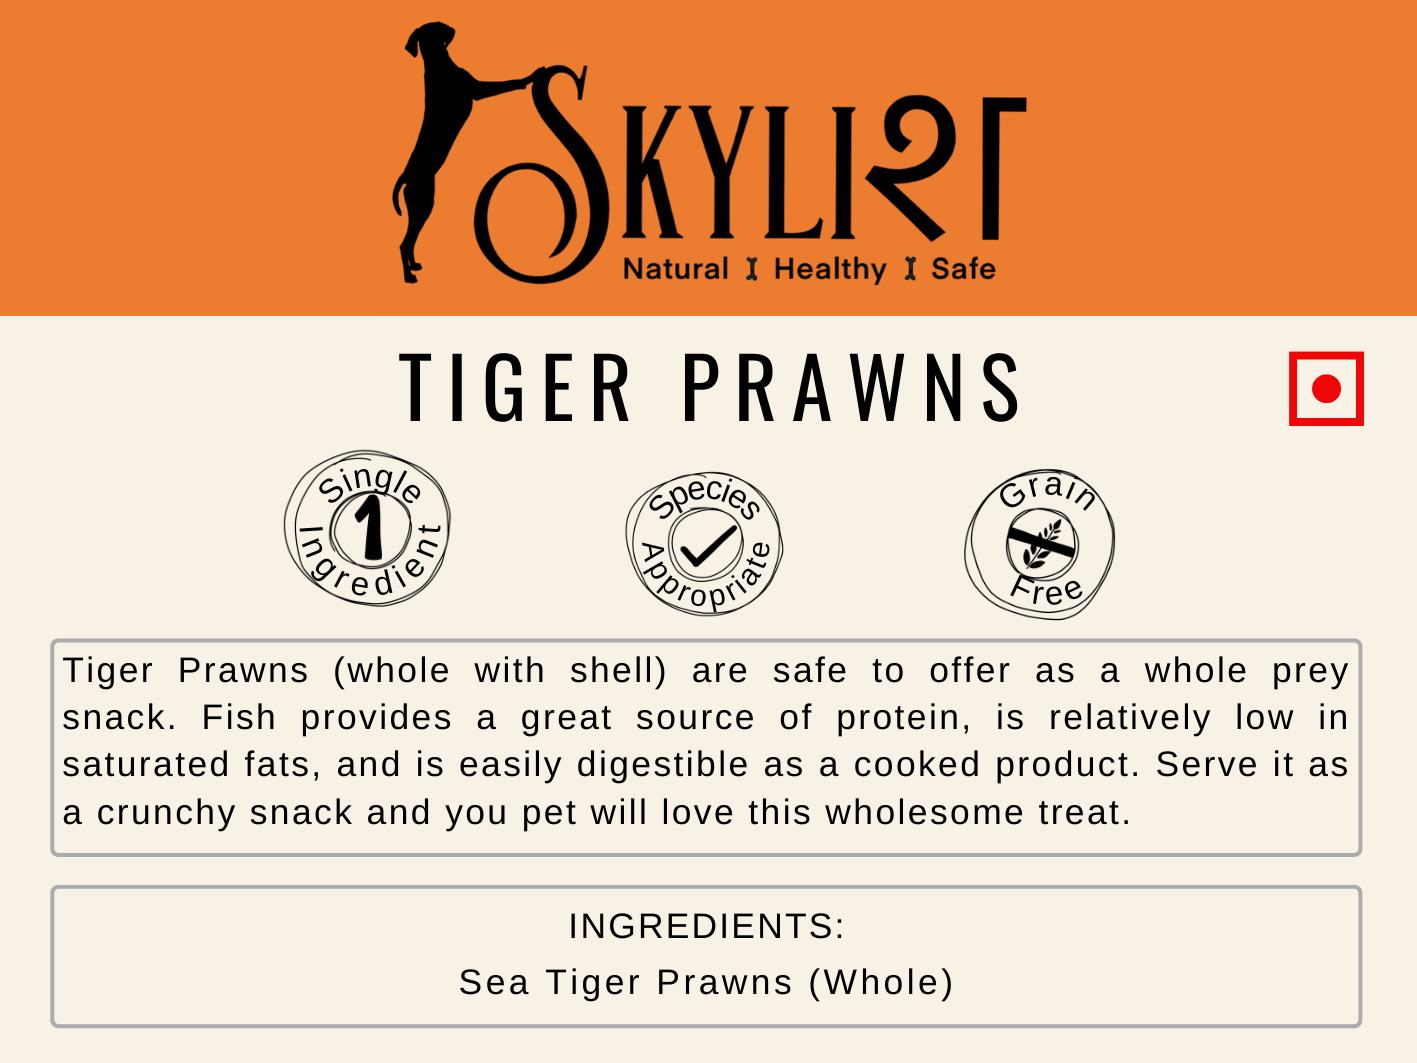 Skylish Tiger Prawns